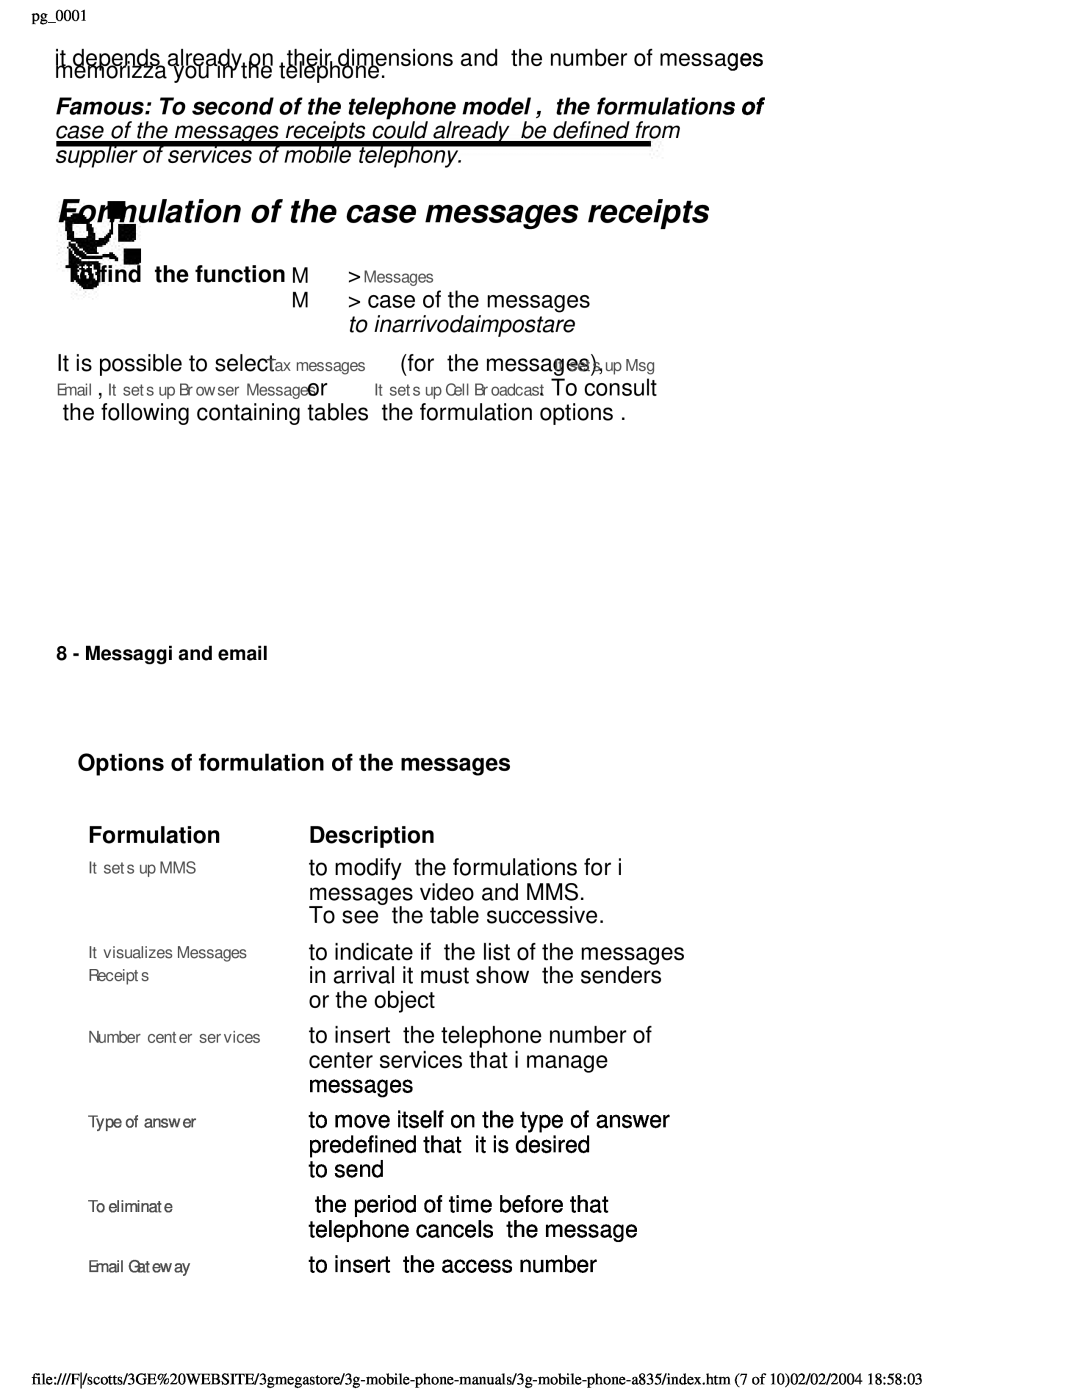 Motorola PG_0001 manual To find the function M Messages, Options of formulation of the messages, Formulation, Description 